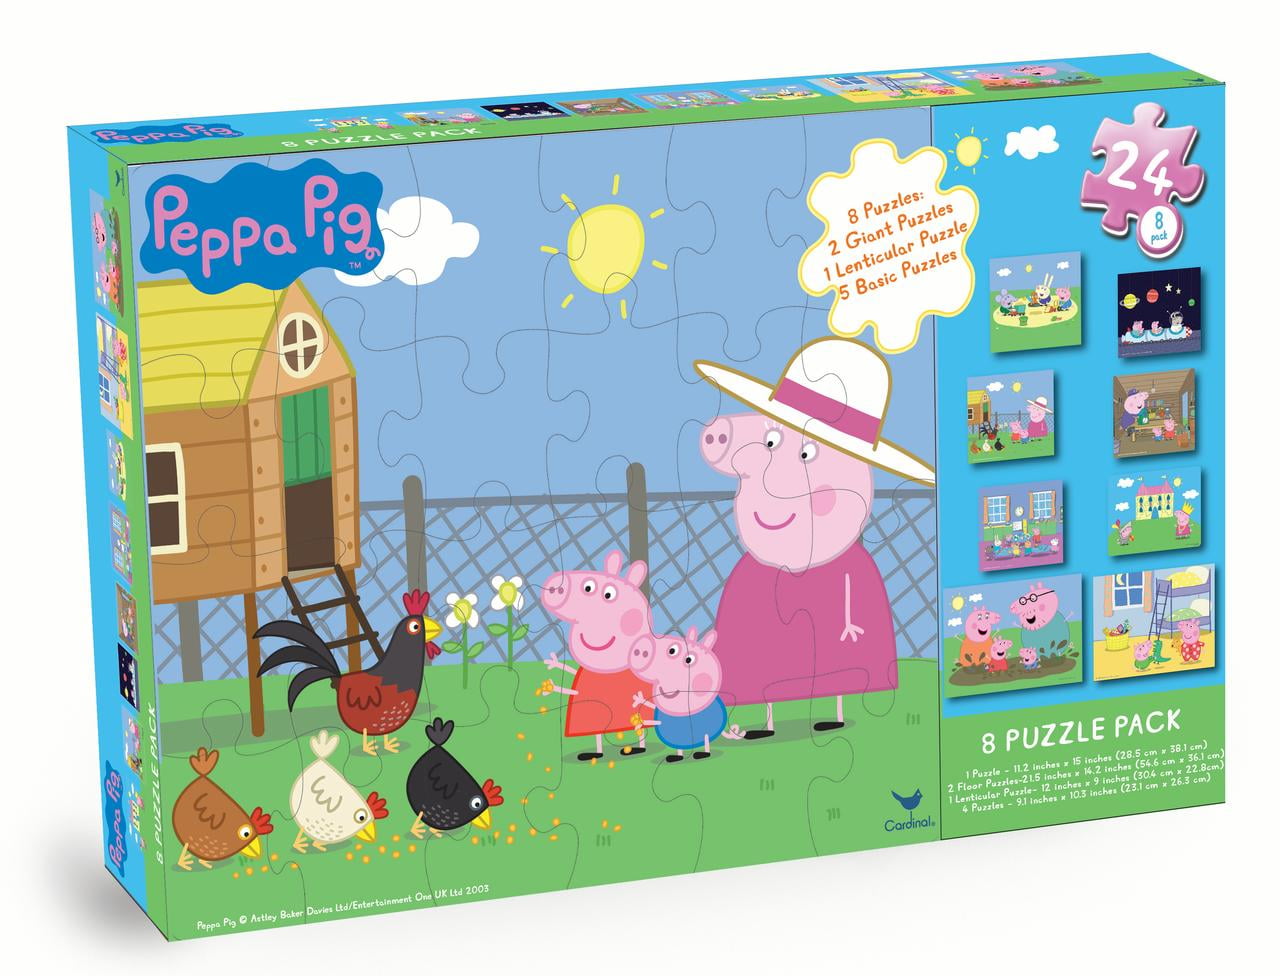 NUOVO Peppa Pig Puzzle & Build 3D Puzzle 